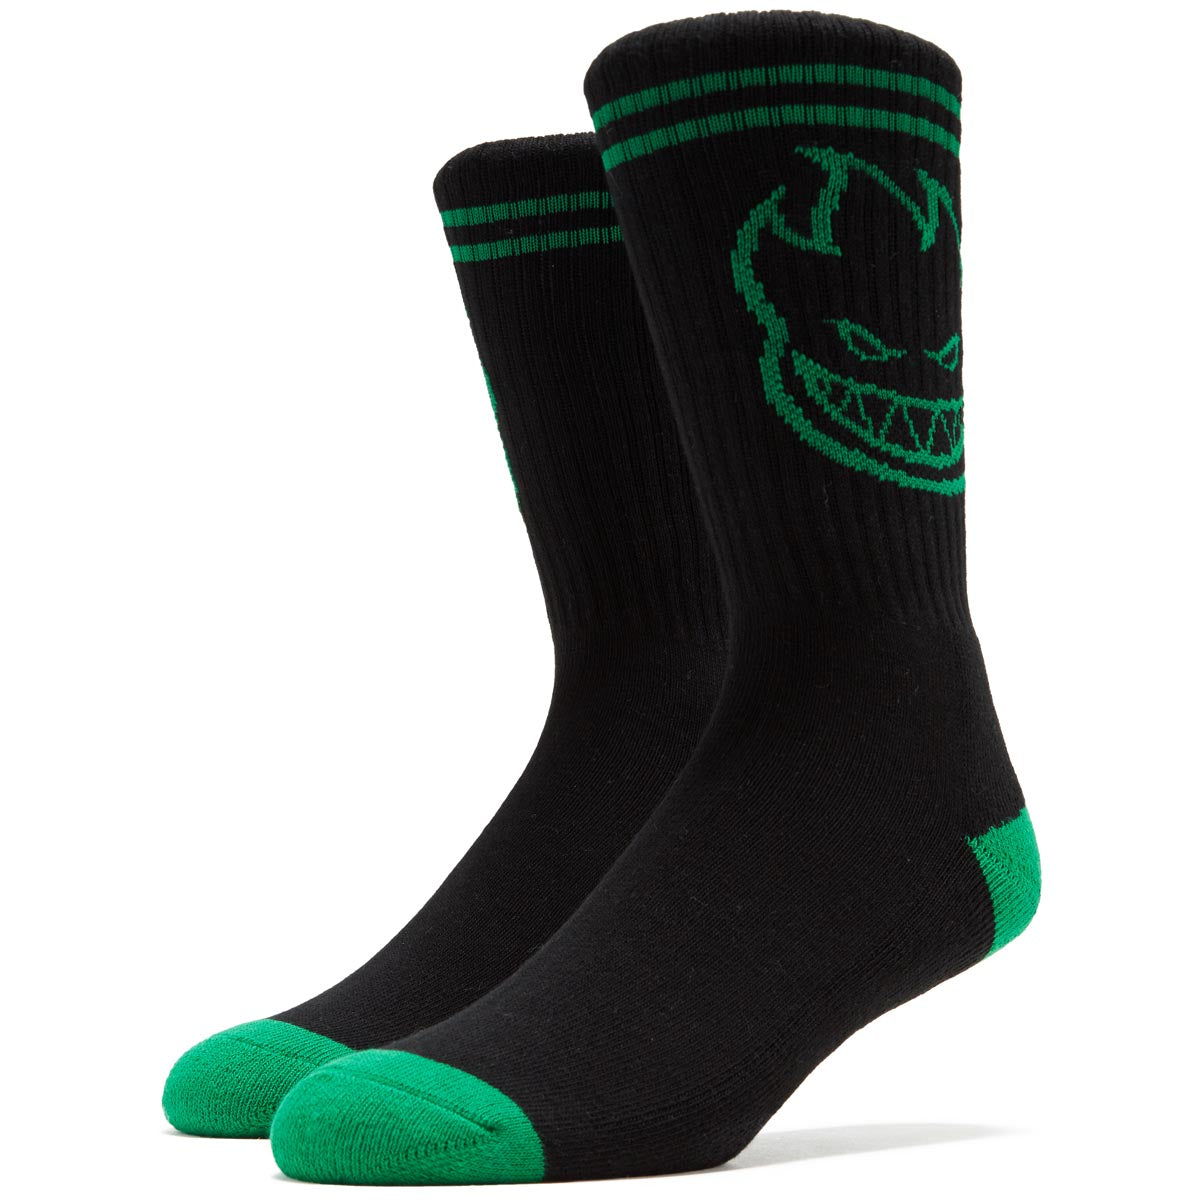 Anti-Hero Bighead Socks - Black/Green image 1